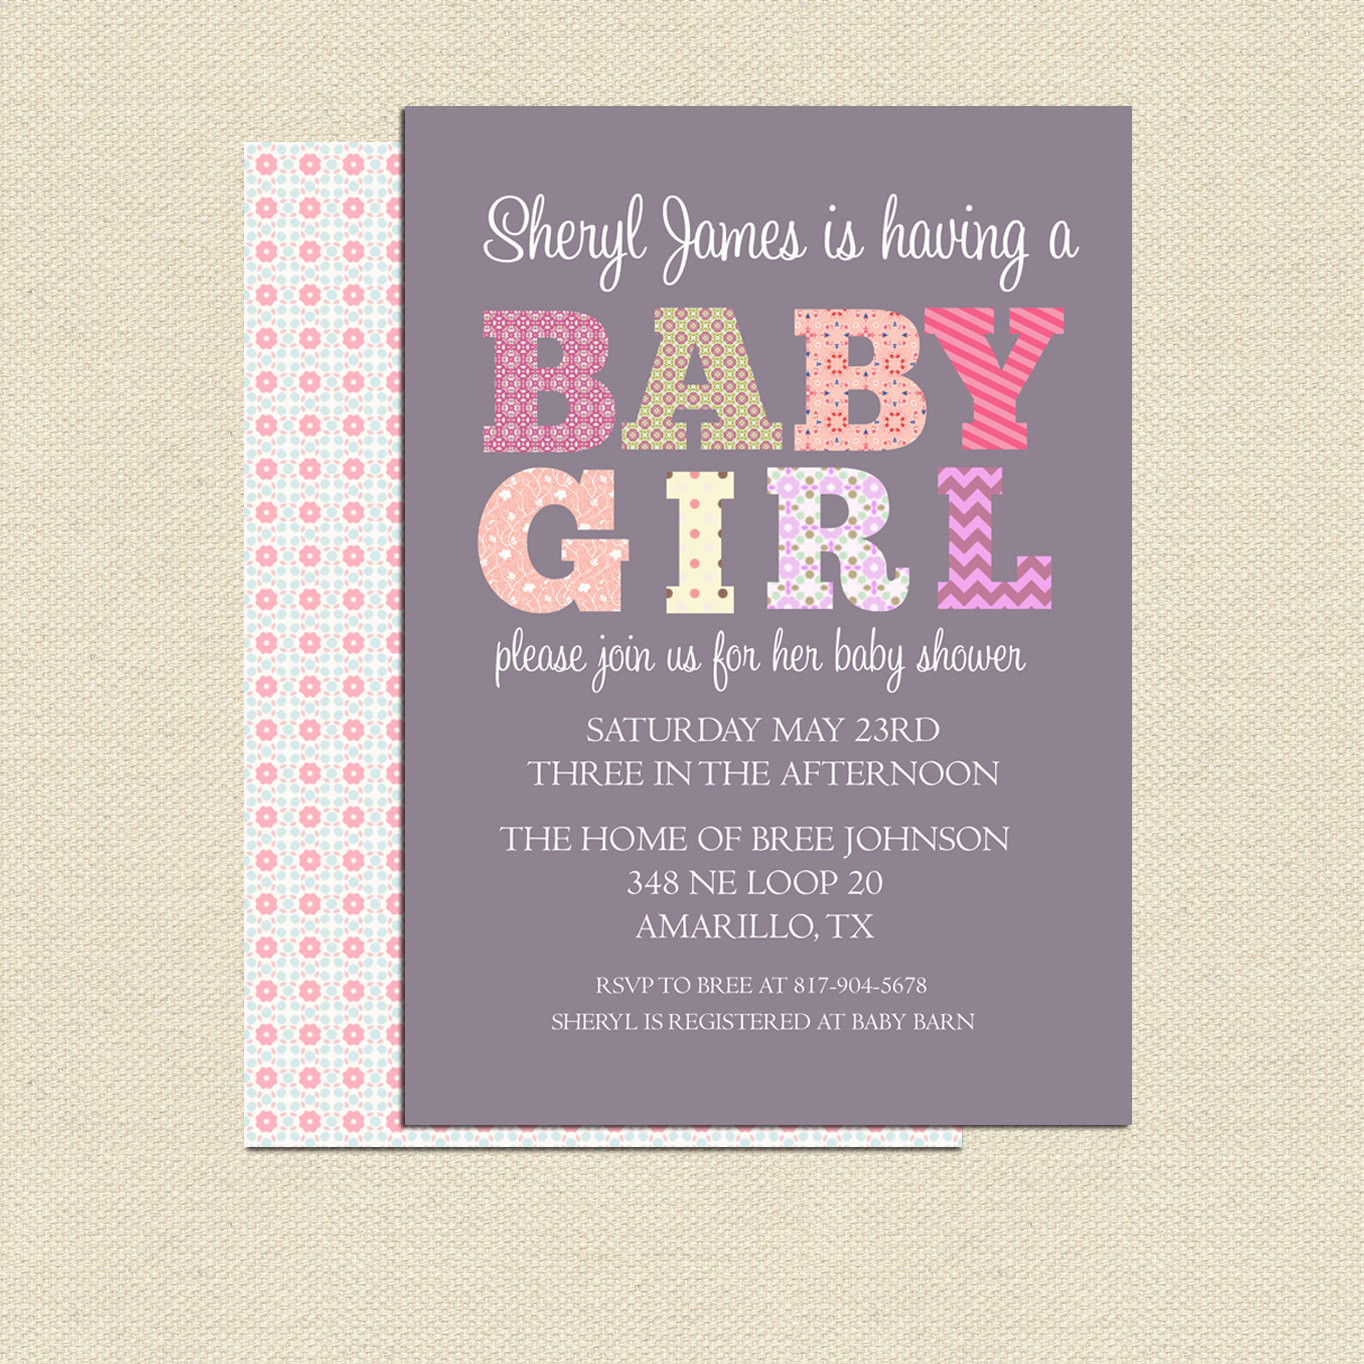 DIY Baby Shower Invitations Free
 DIY Printable Baby Shower Invitation For Girl No 2